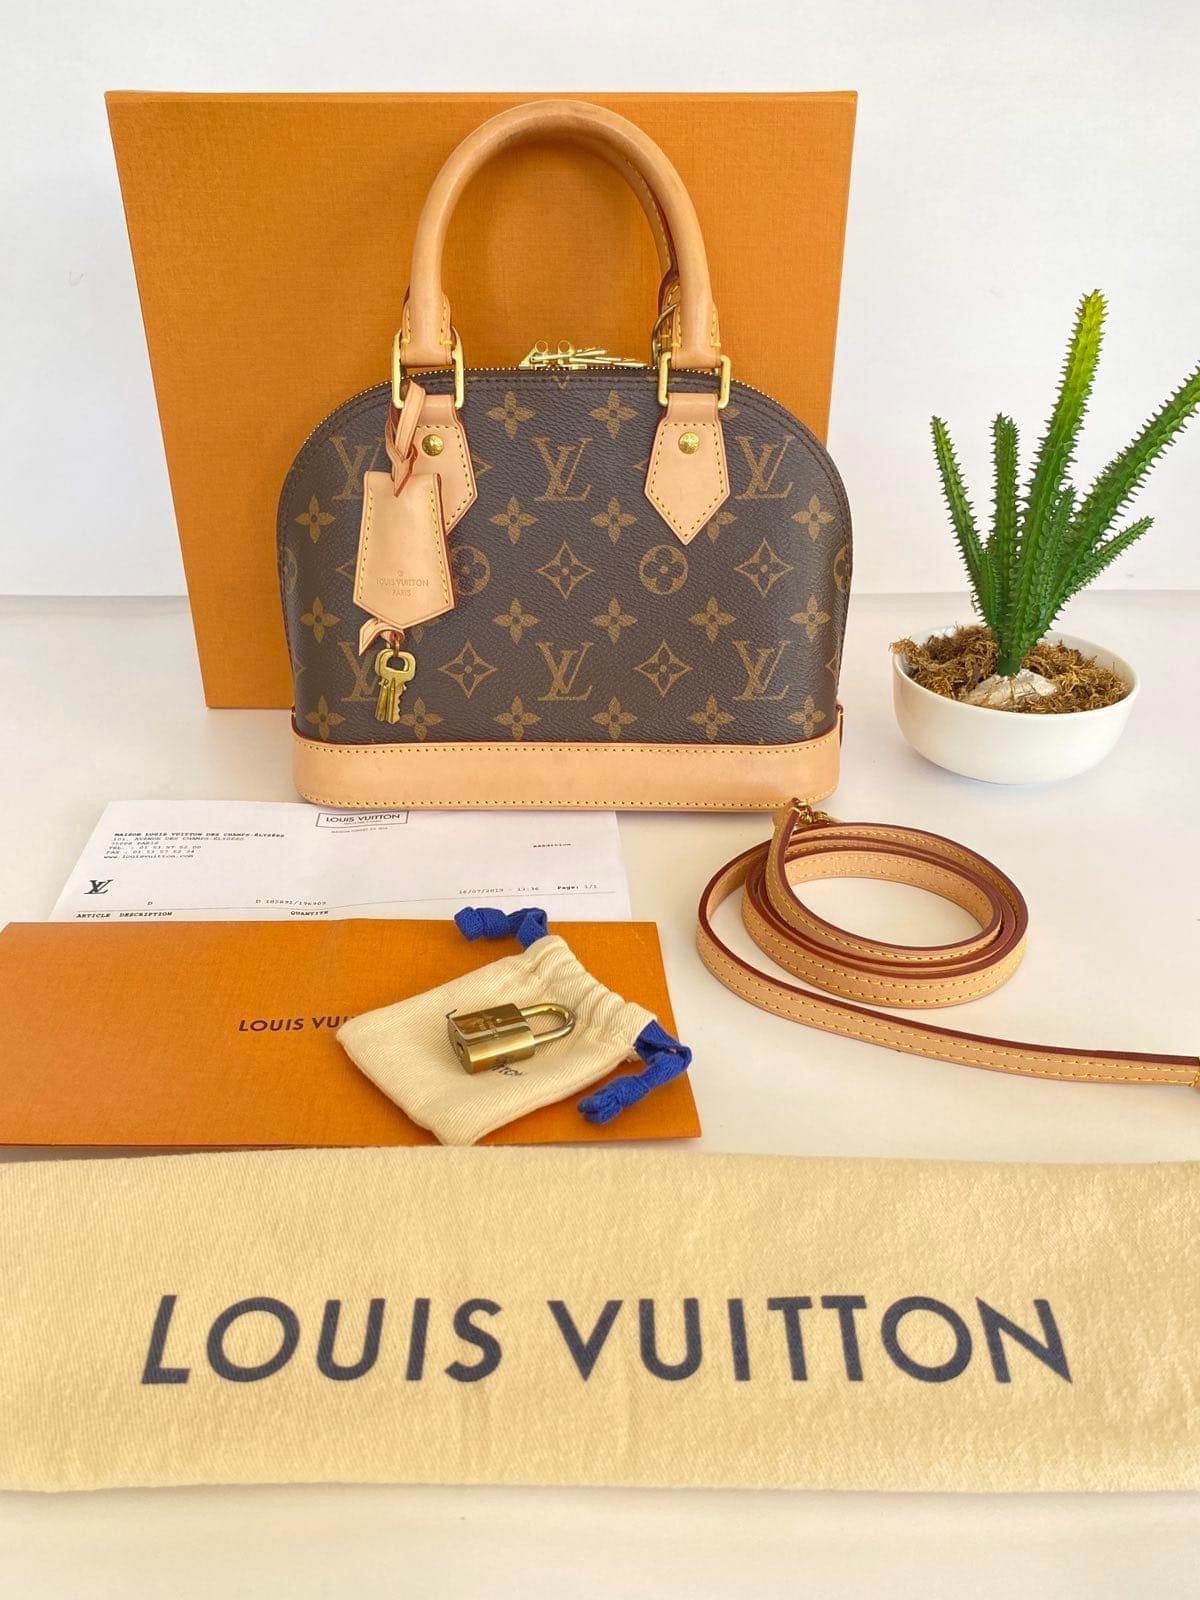 Louis Vuitton Monogram Alma BB. Made in France. Date code: FL2169 - Canon  E-Bags Prime